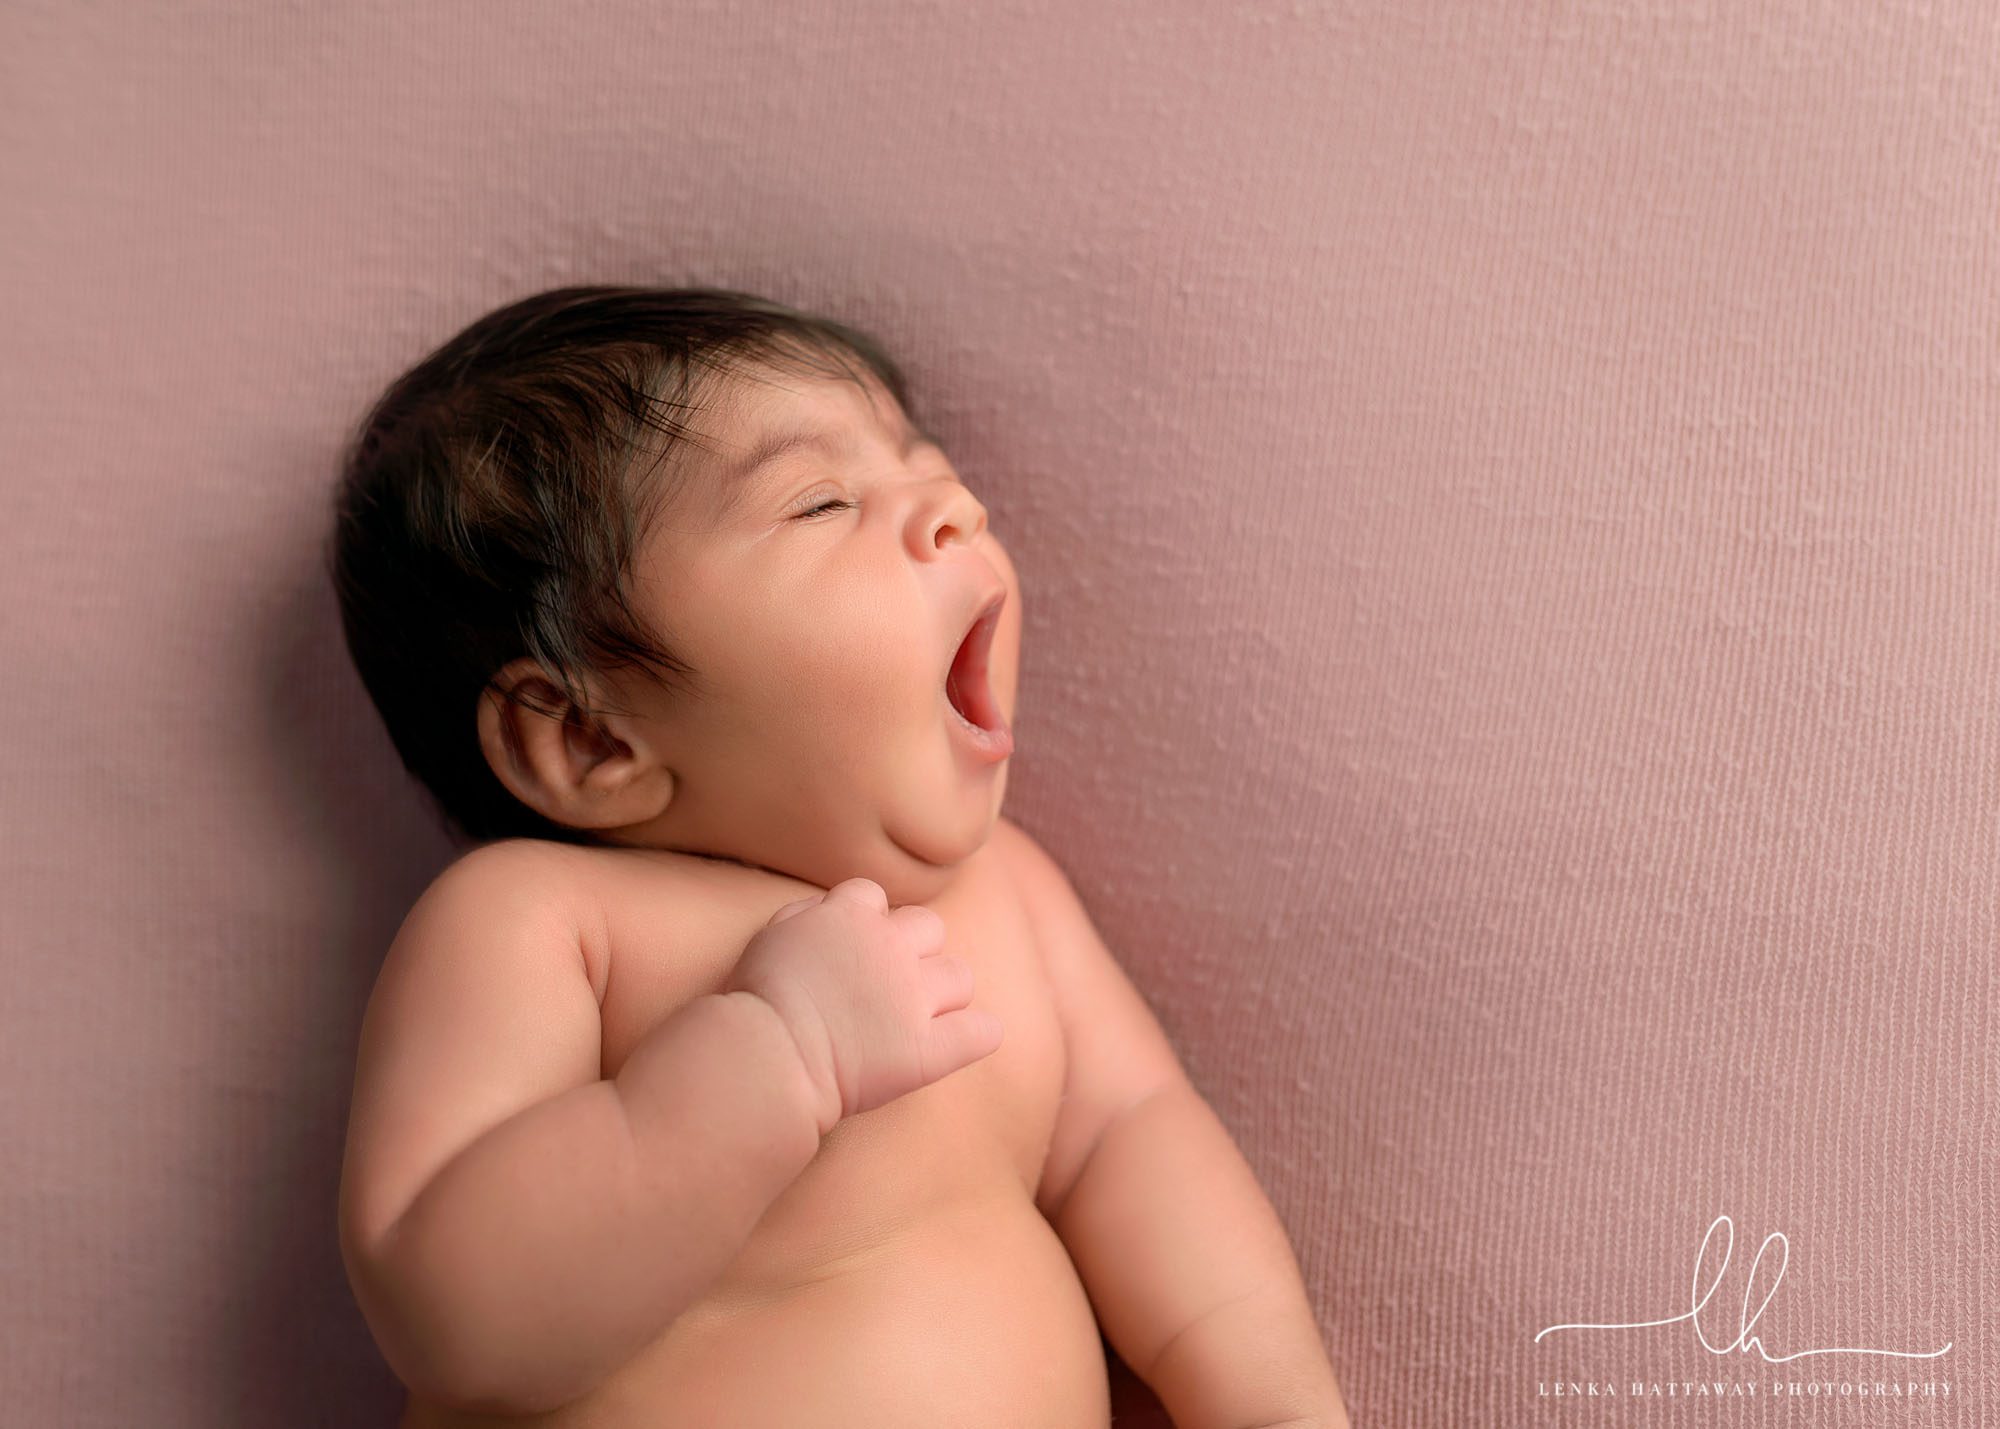 Adorable yawning newborn baby.